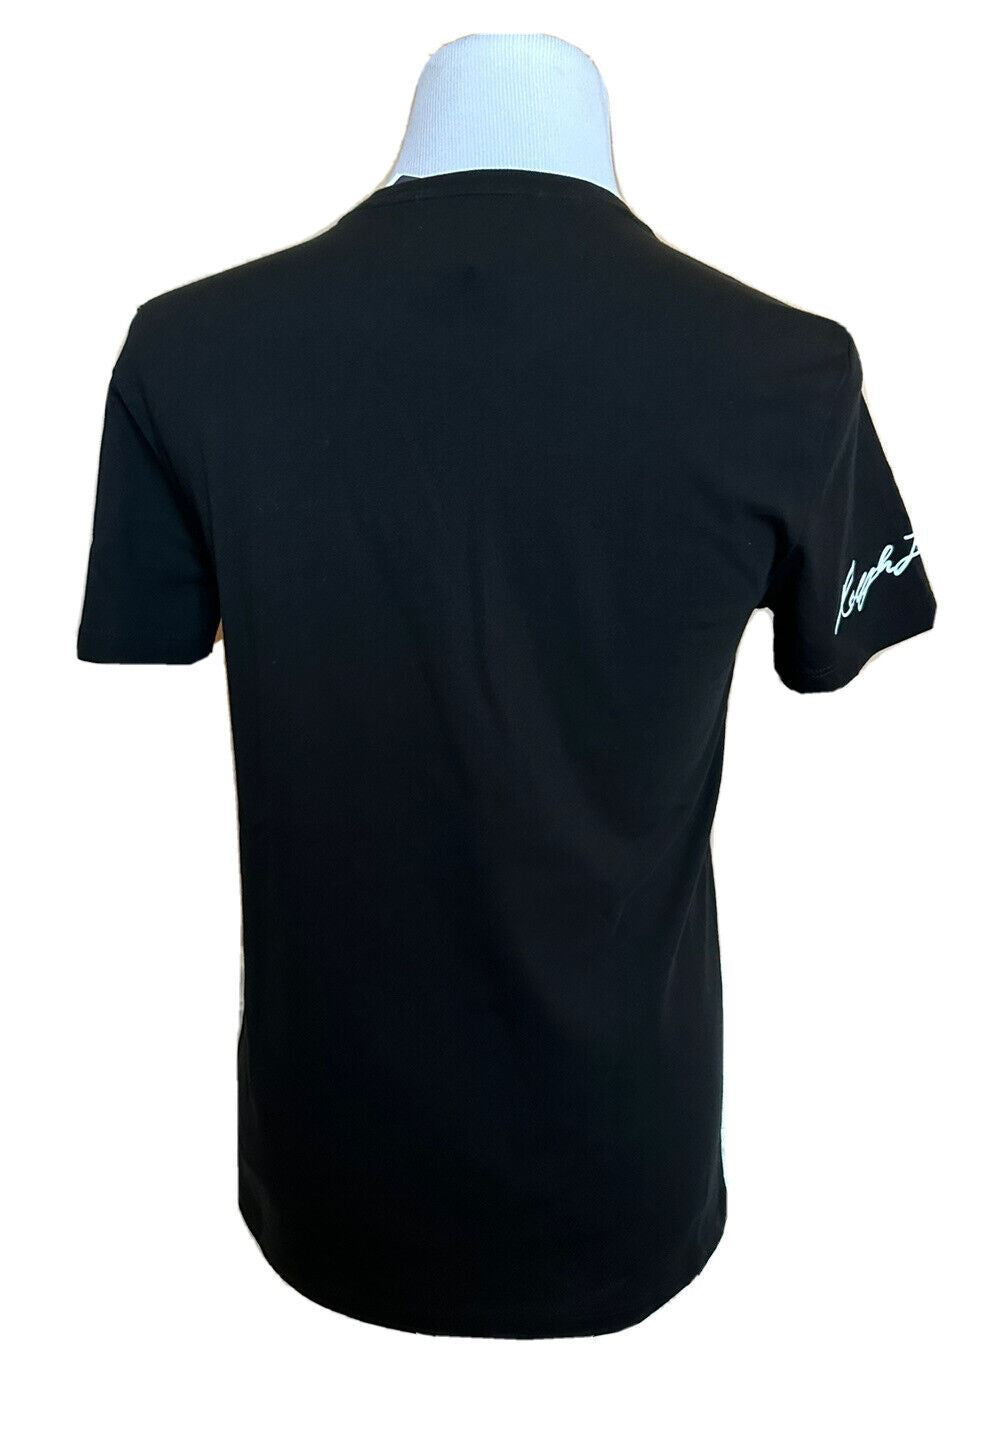 Черная футболка с логотипом и короткими рукавами Polo Ralph Lauren, размер NWT 65 долларов США (L) 